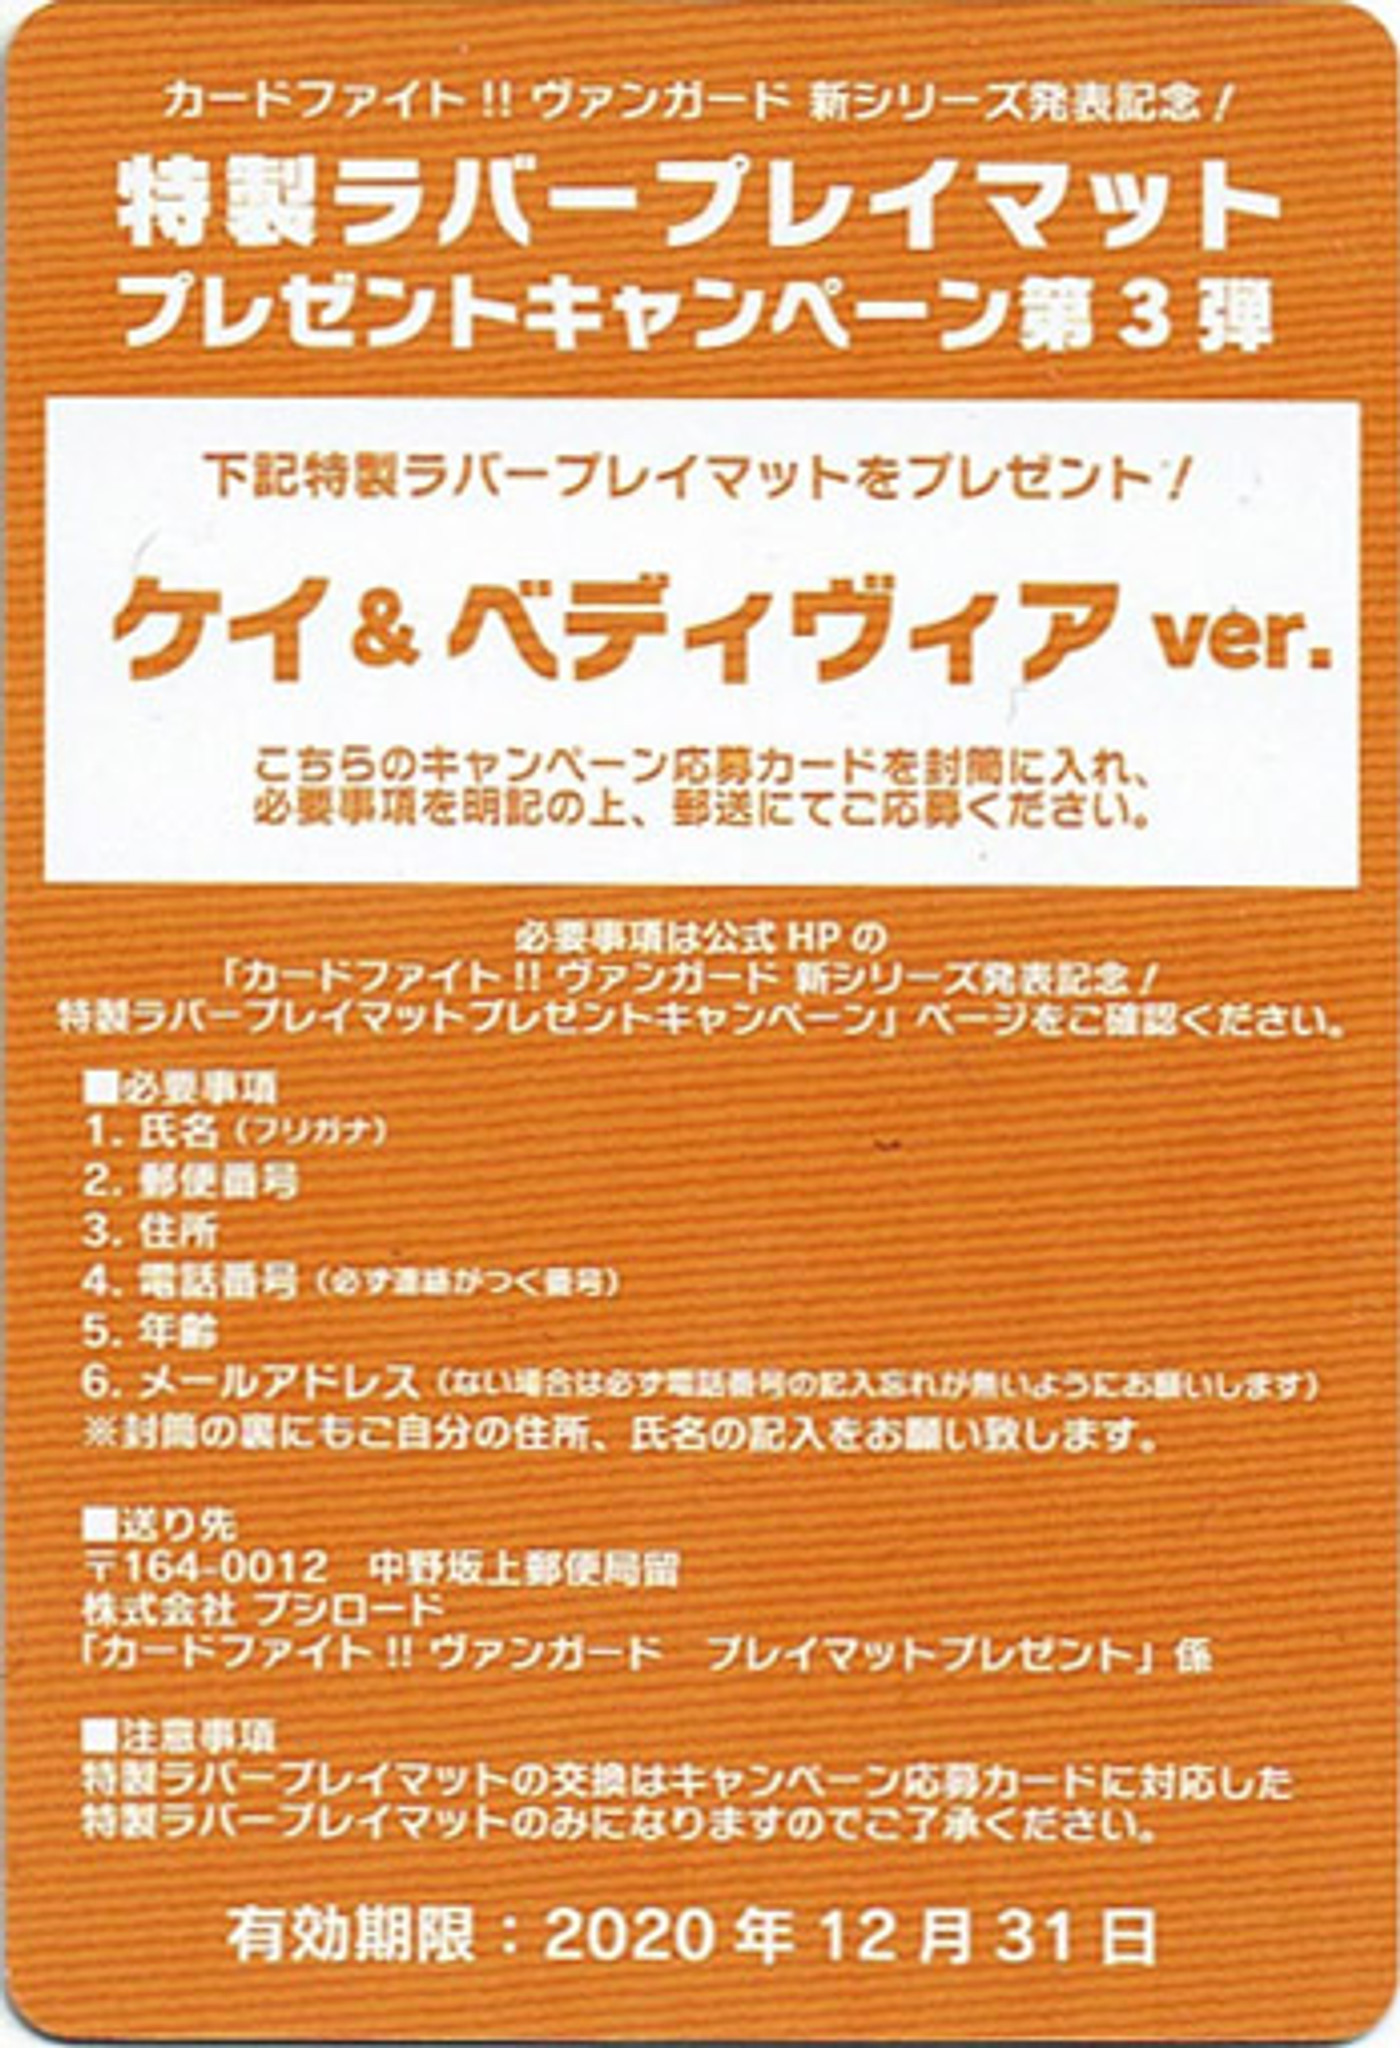 Cardfight Vanguard V Booster Set 03 Miyaji Academy Cardfight Club Playmat Exchange Coupon Card Kay Bedivere